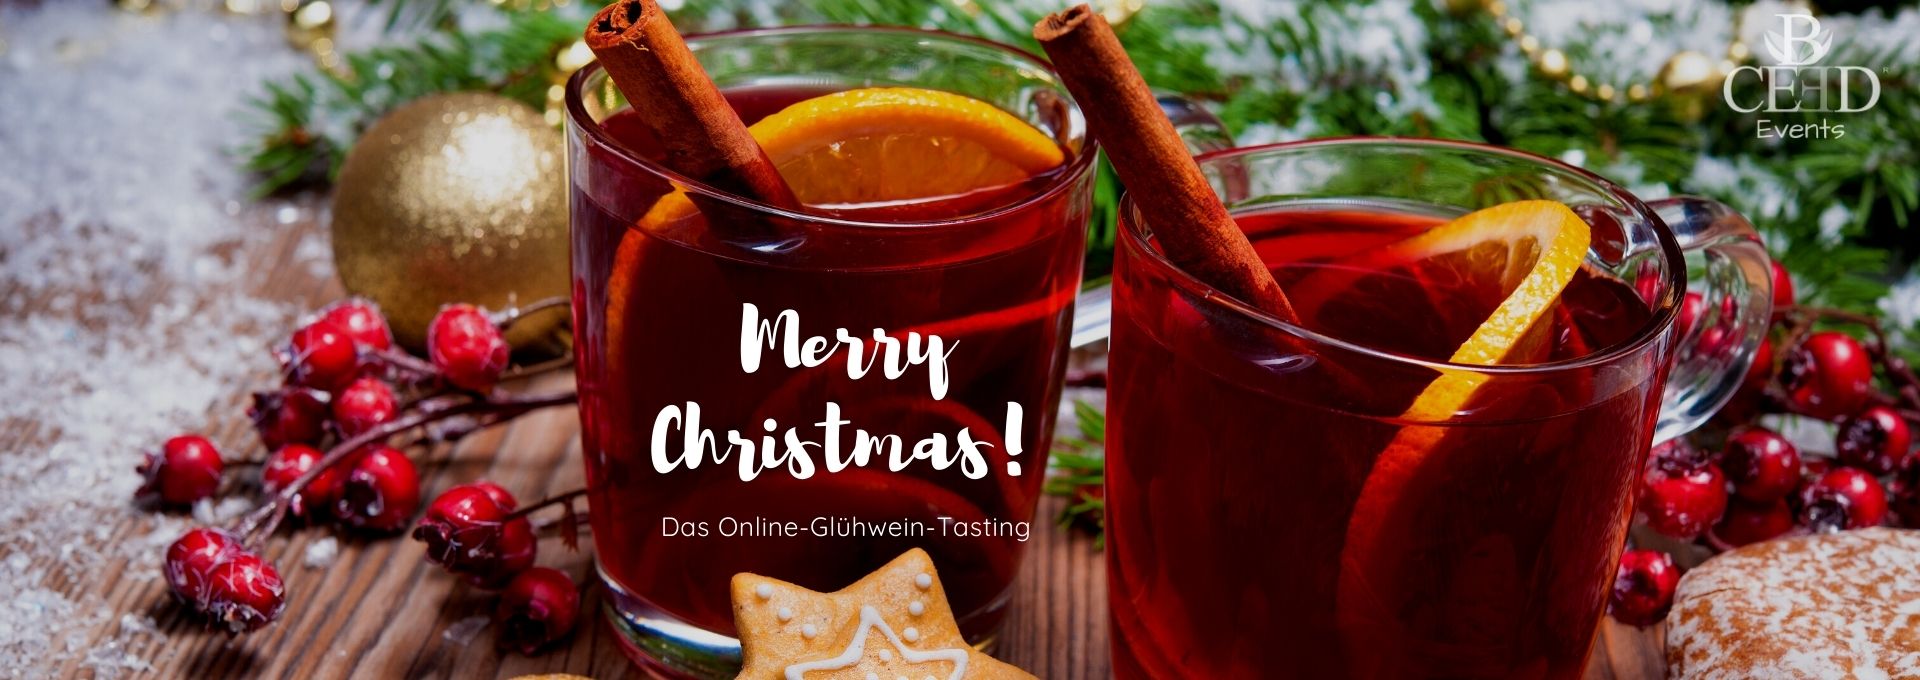 Online Christmas Party - Book virtual Gluehwein Tasting by b-ceed